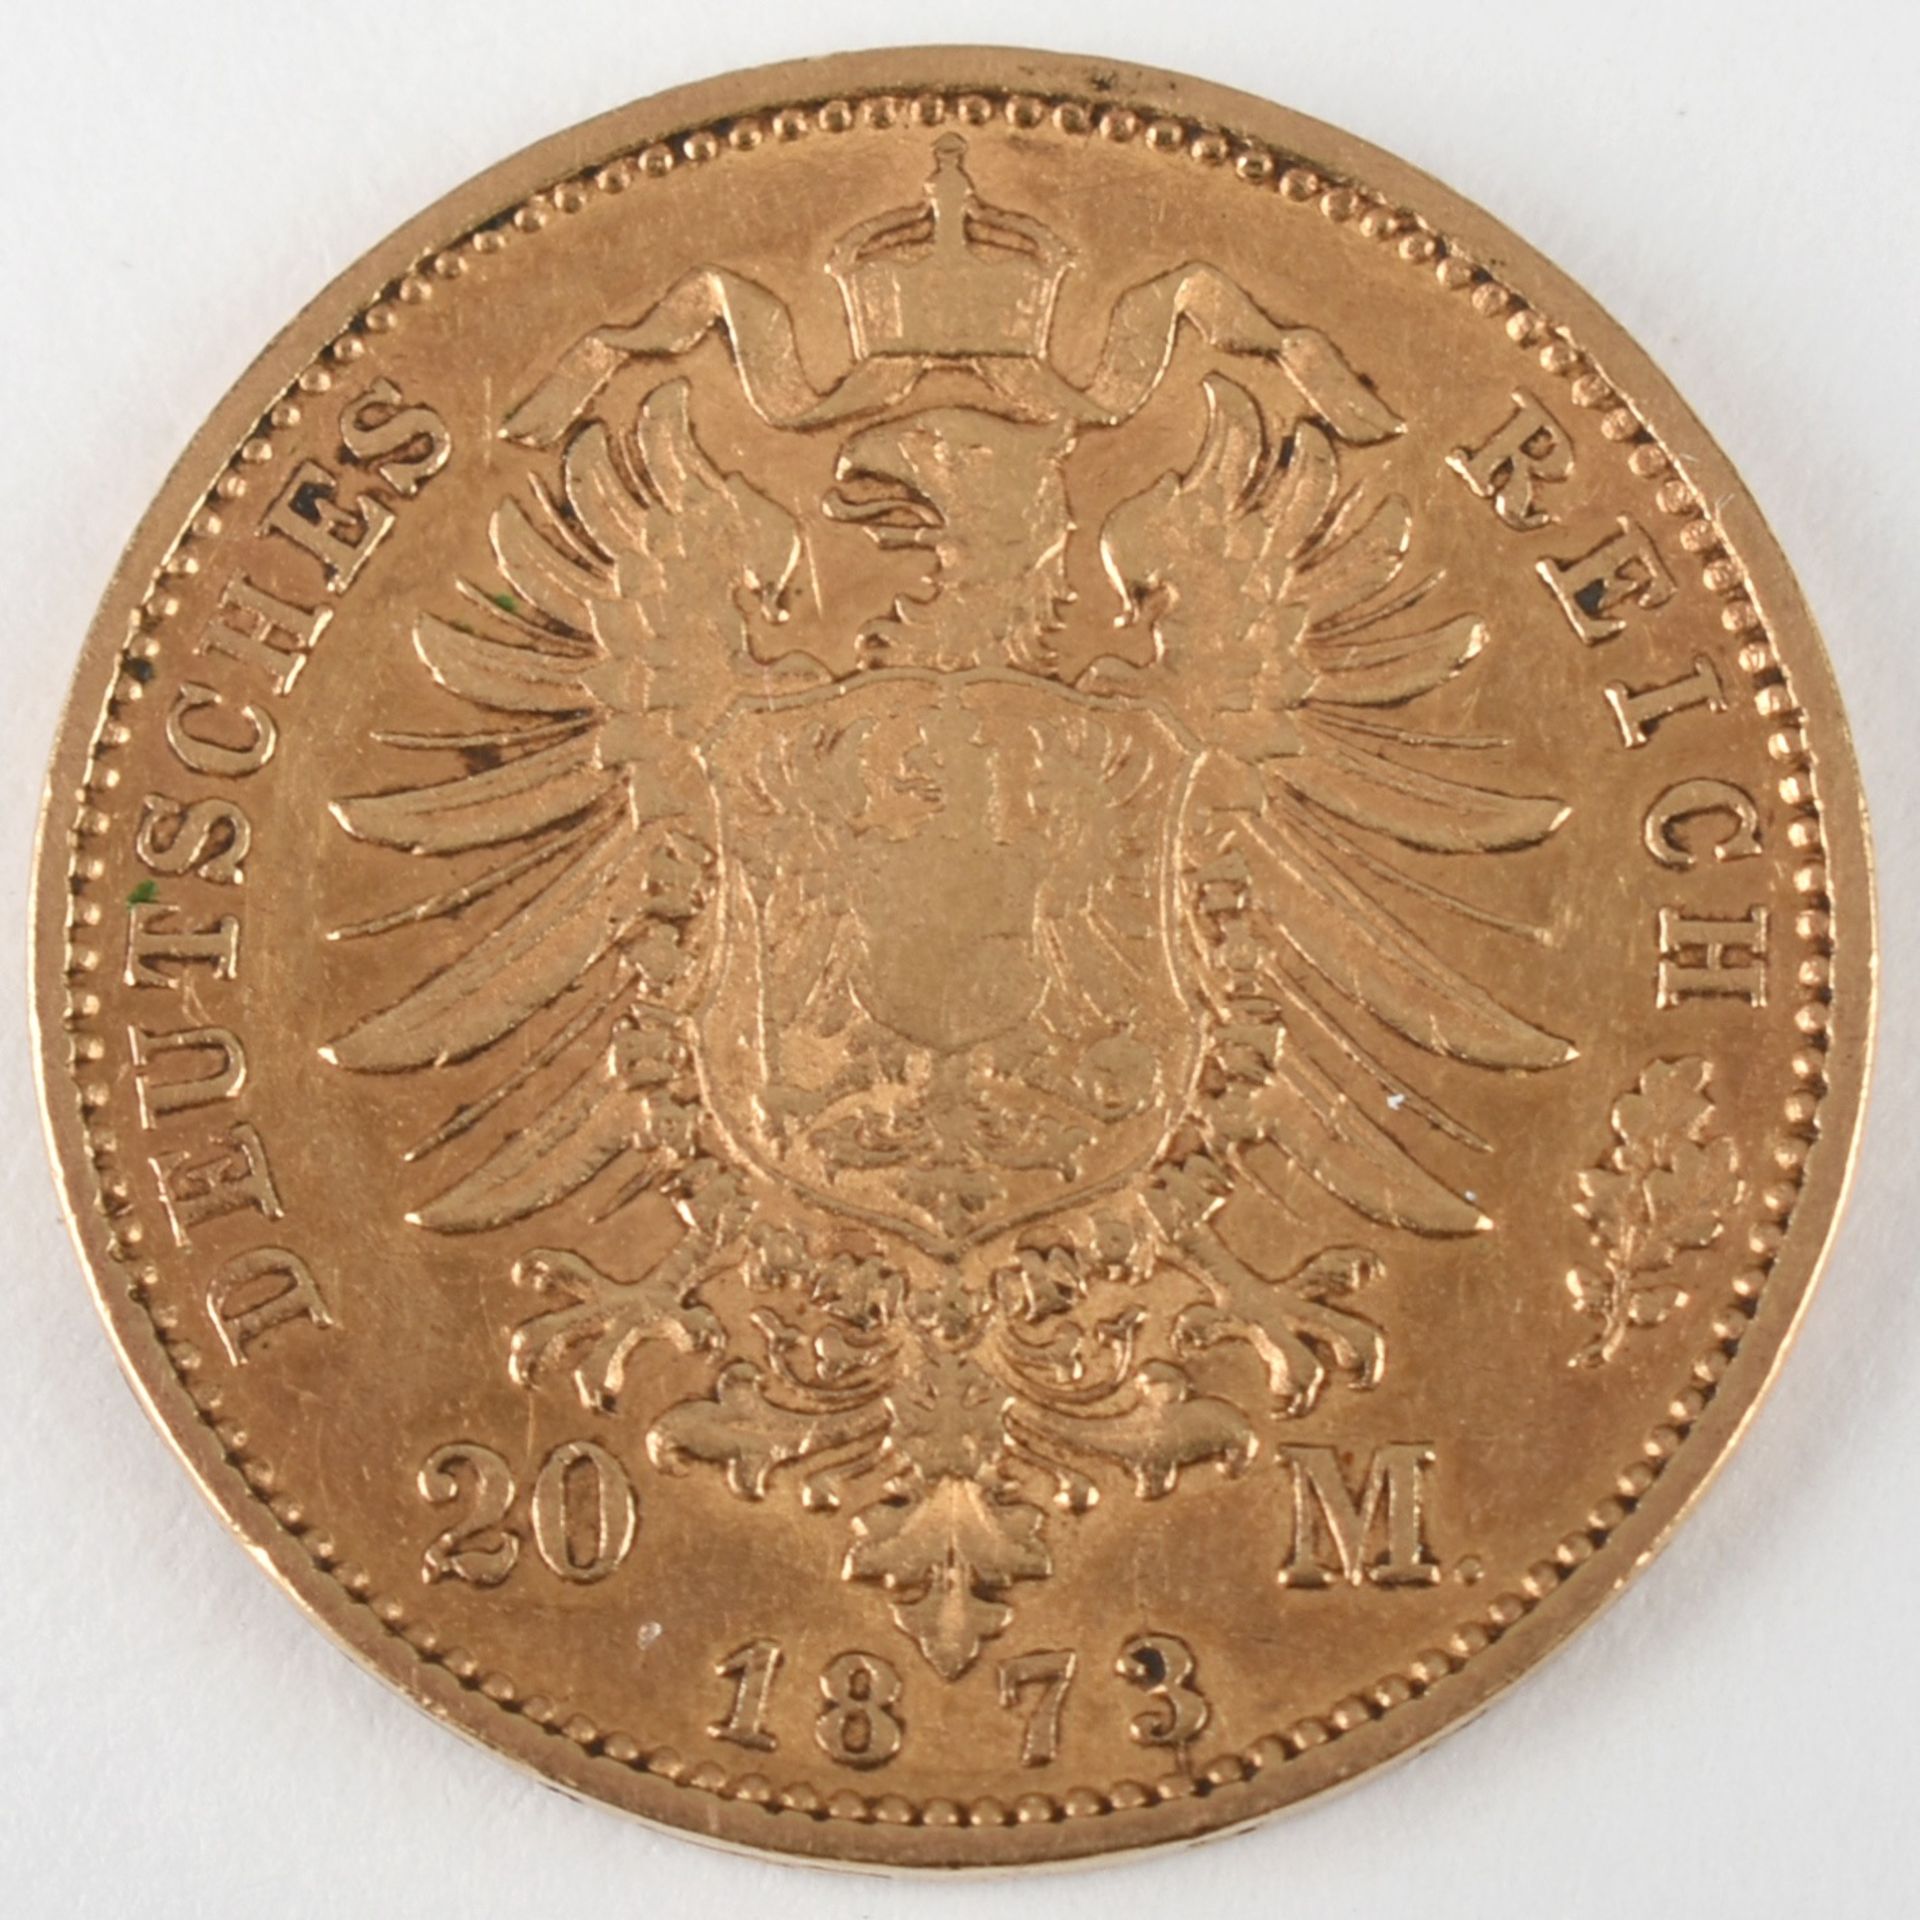 Goldmünze Kaiserreich - Hessen 1873 20 Mark in Gold, 900/1000, 7,96 g, D ca. 22,5 mm, av. Ludwig III - Image 3 of 3